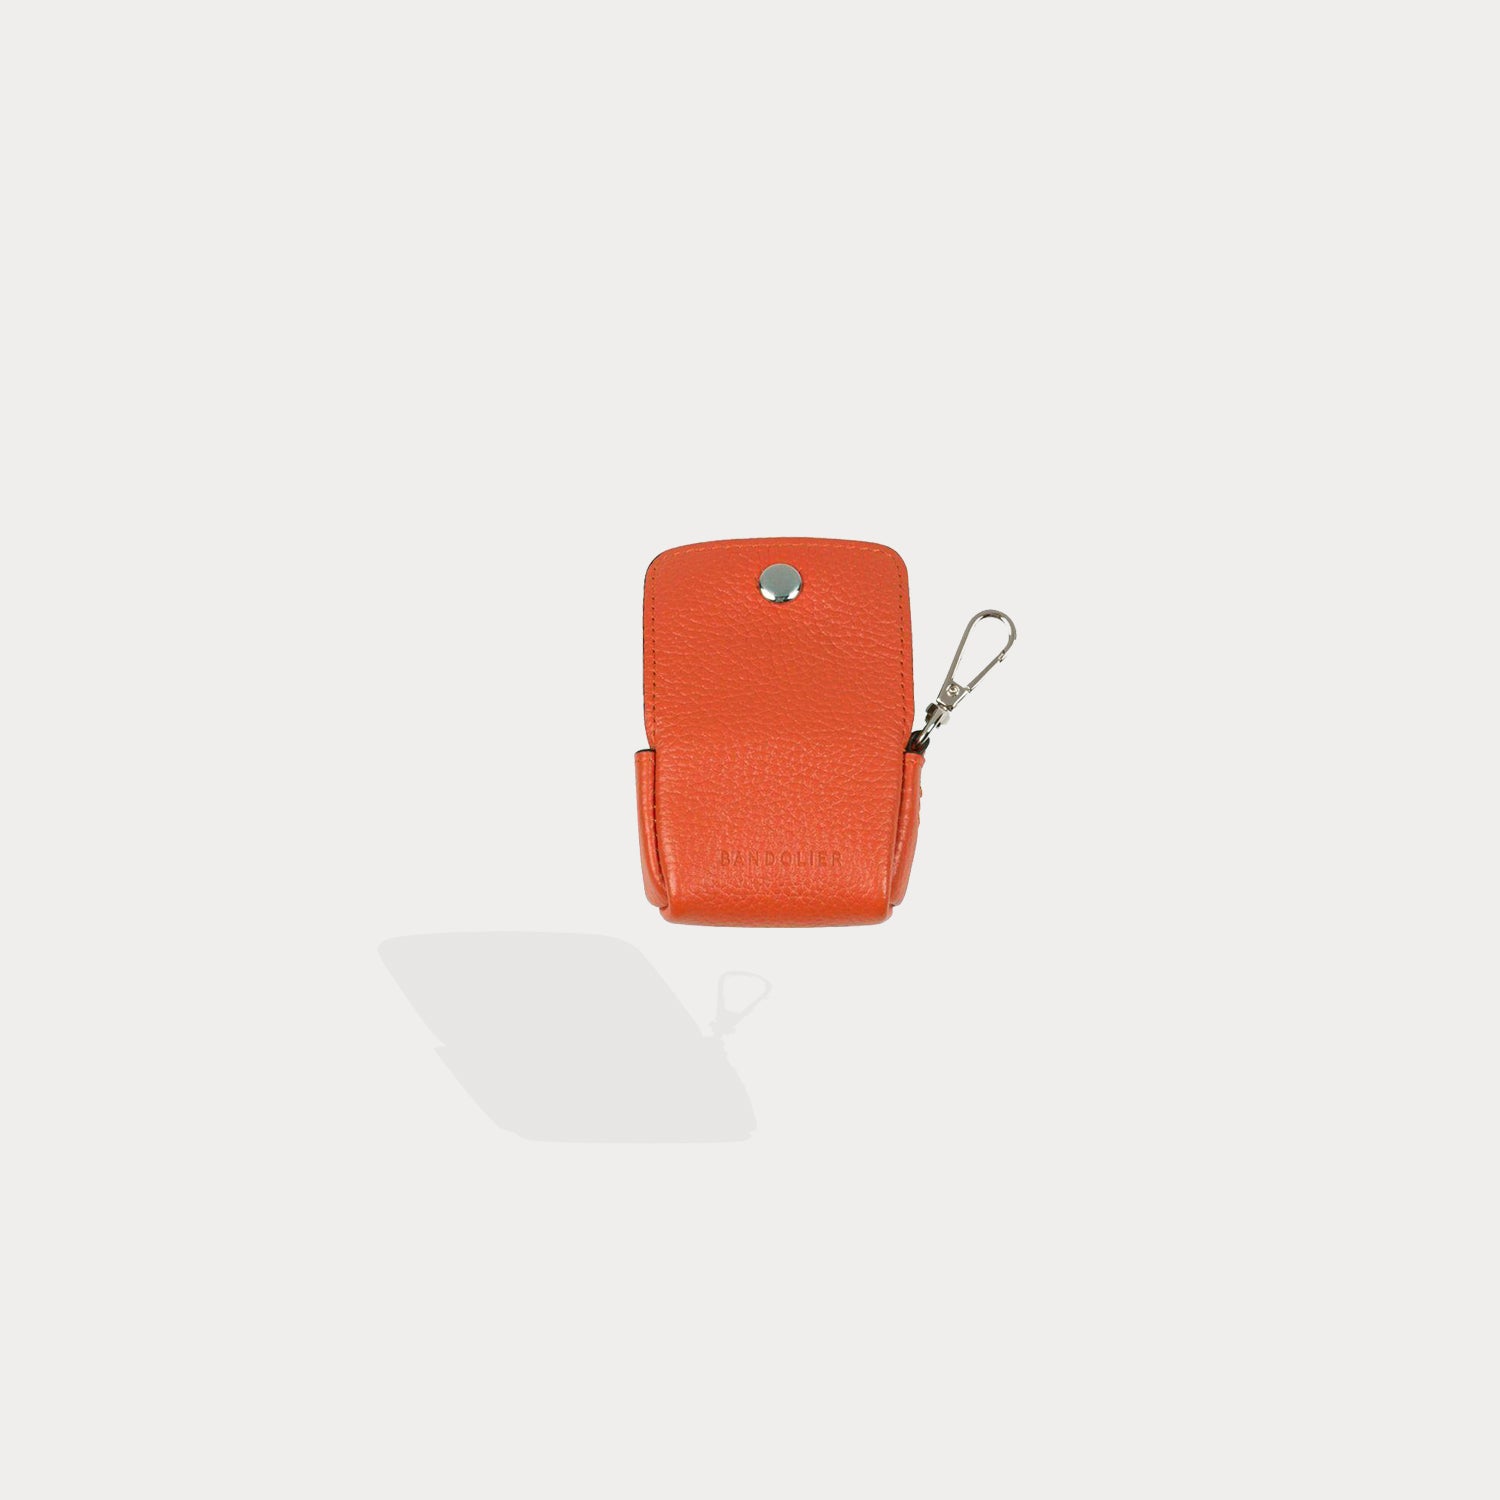 Avery AirPod Clip-On Pouch - Orange/Silver Pouch Core Bandolier 